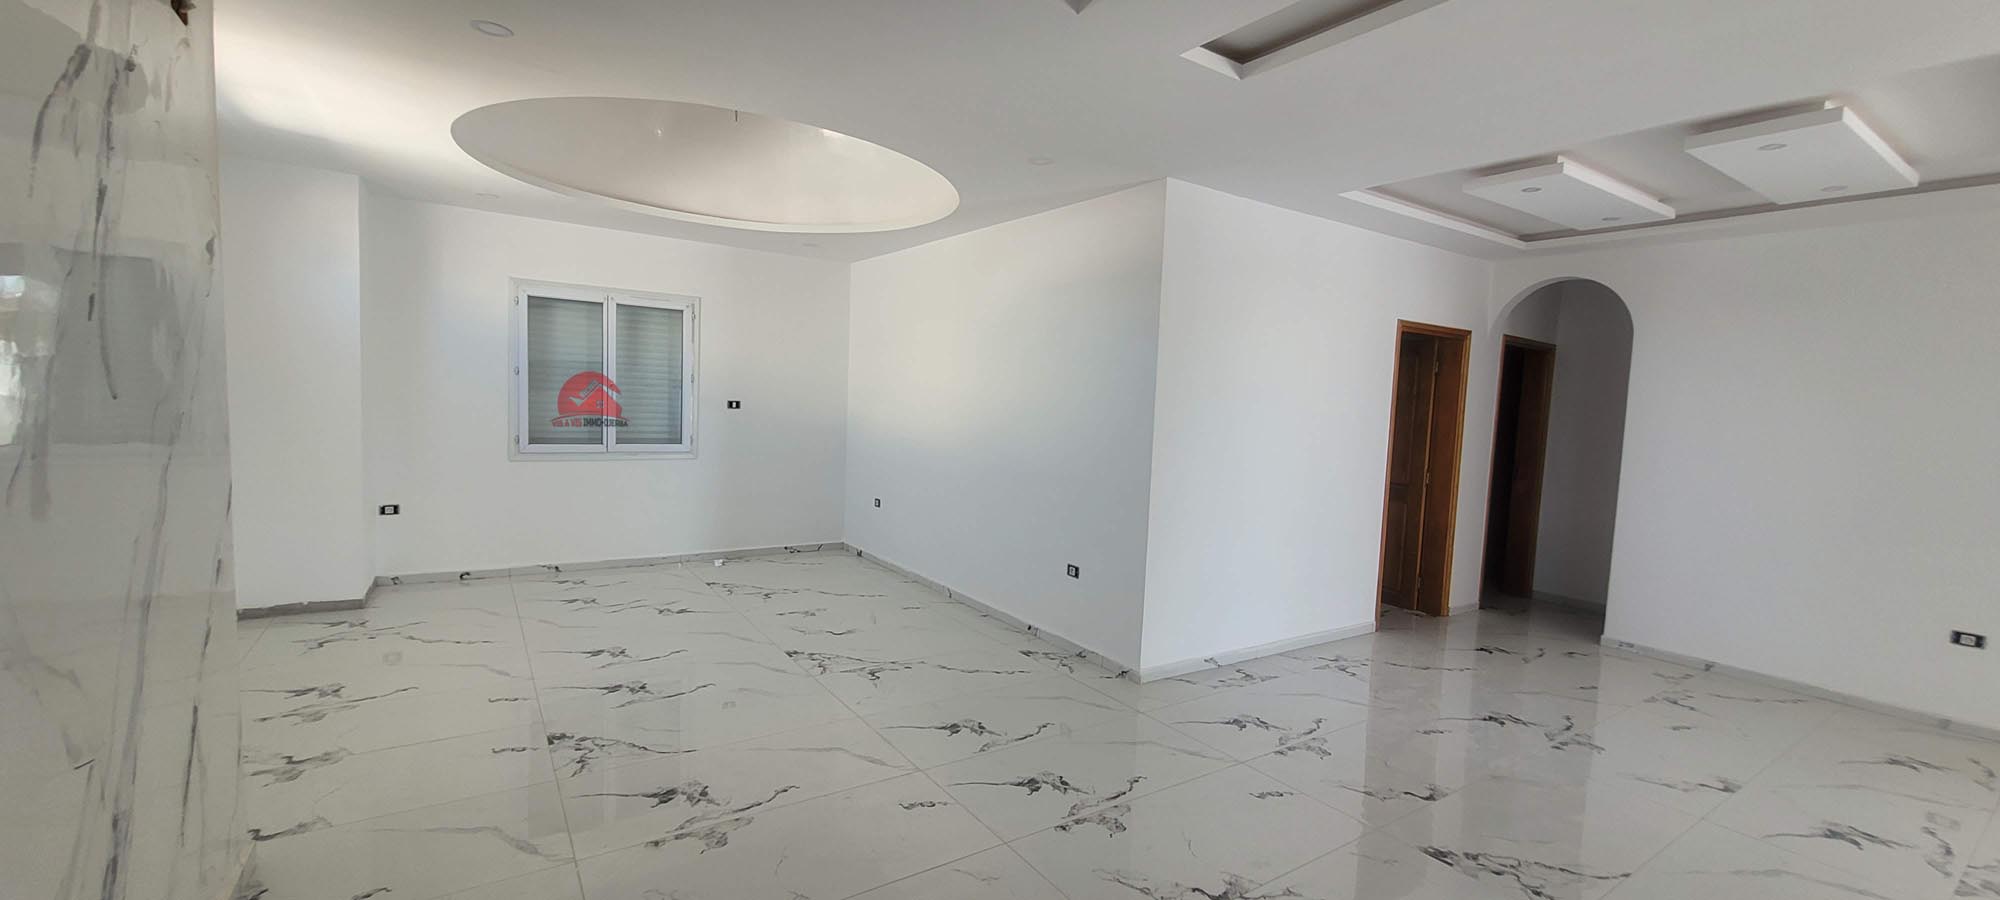 Djerba - Midoun Zone Hoteliere Vente Maisons Villa avec etage independant a djerba  ref v673